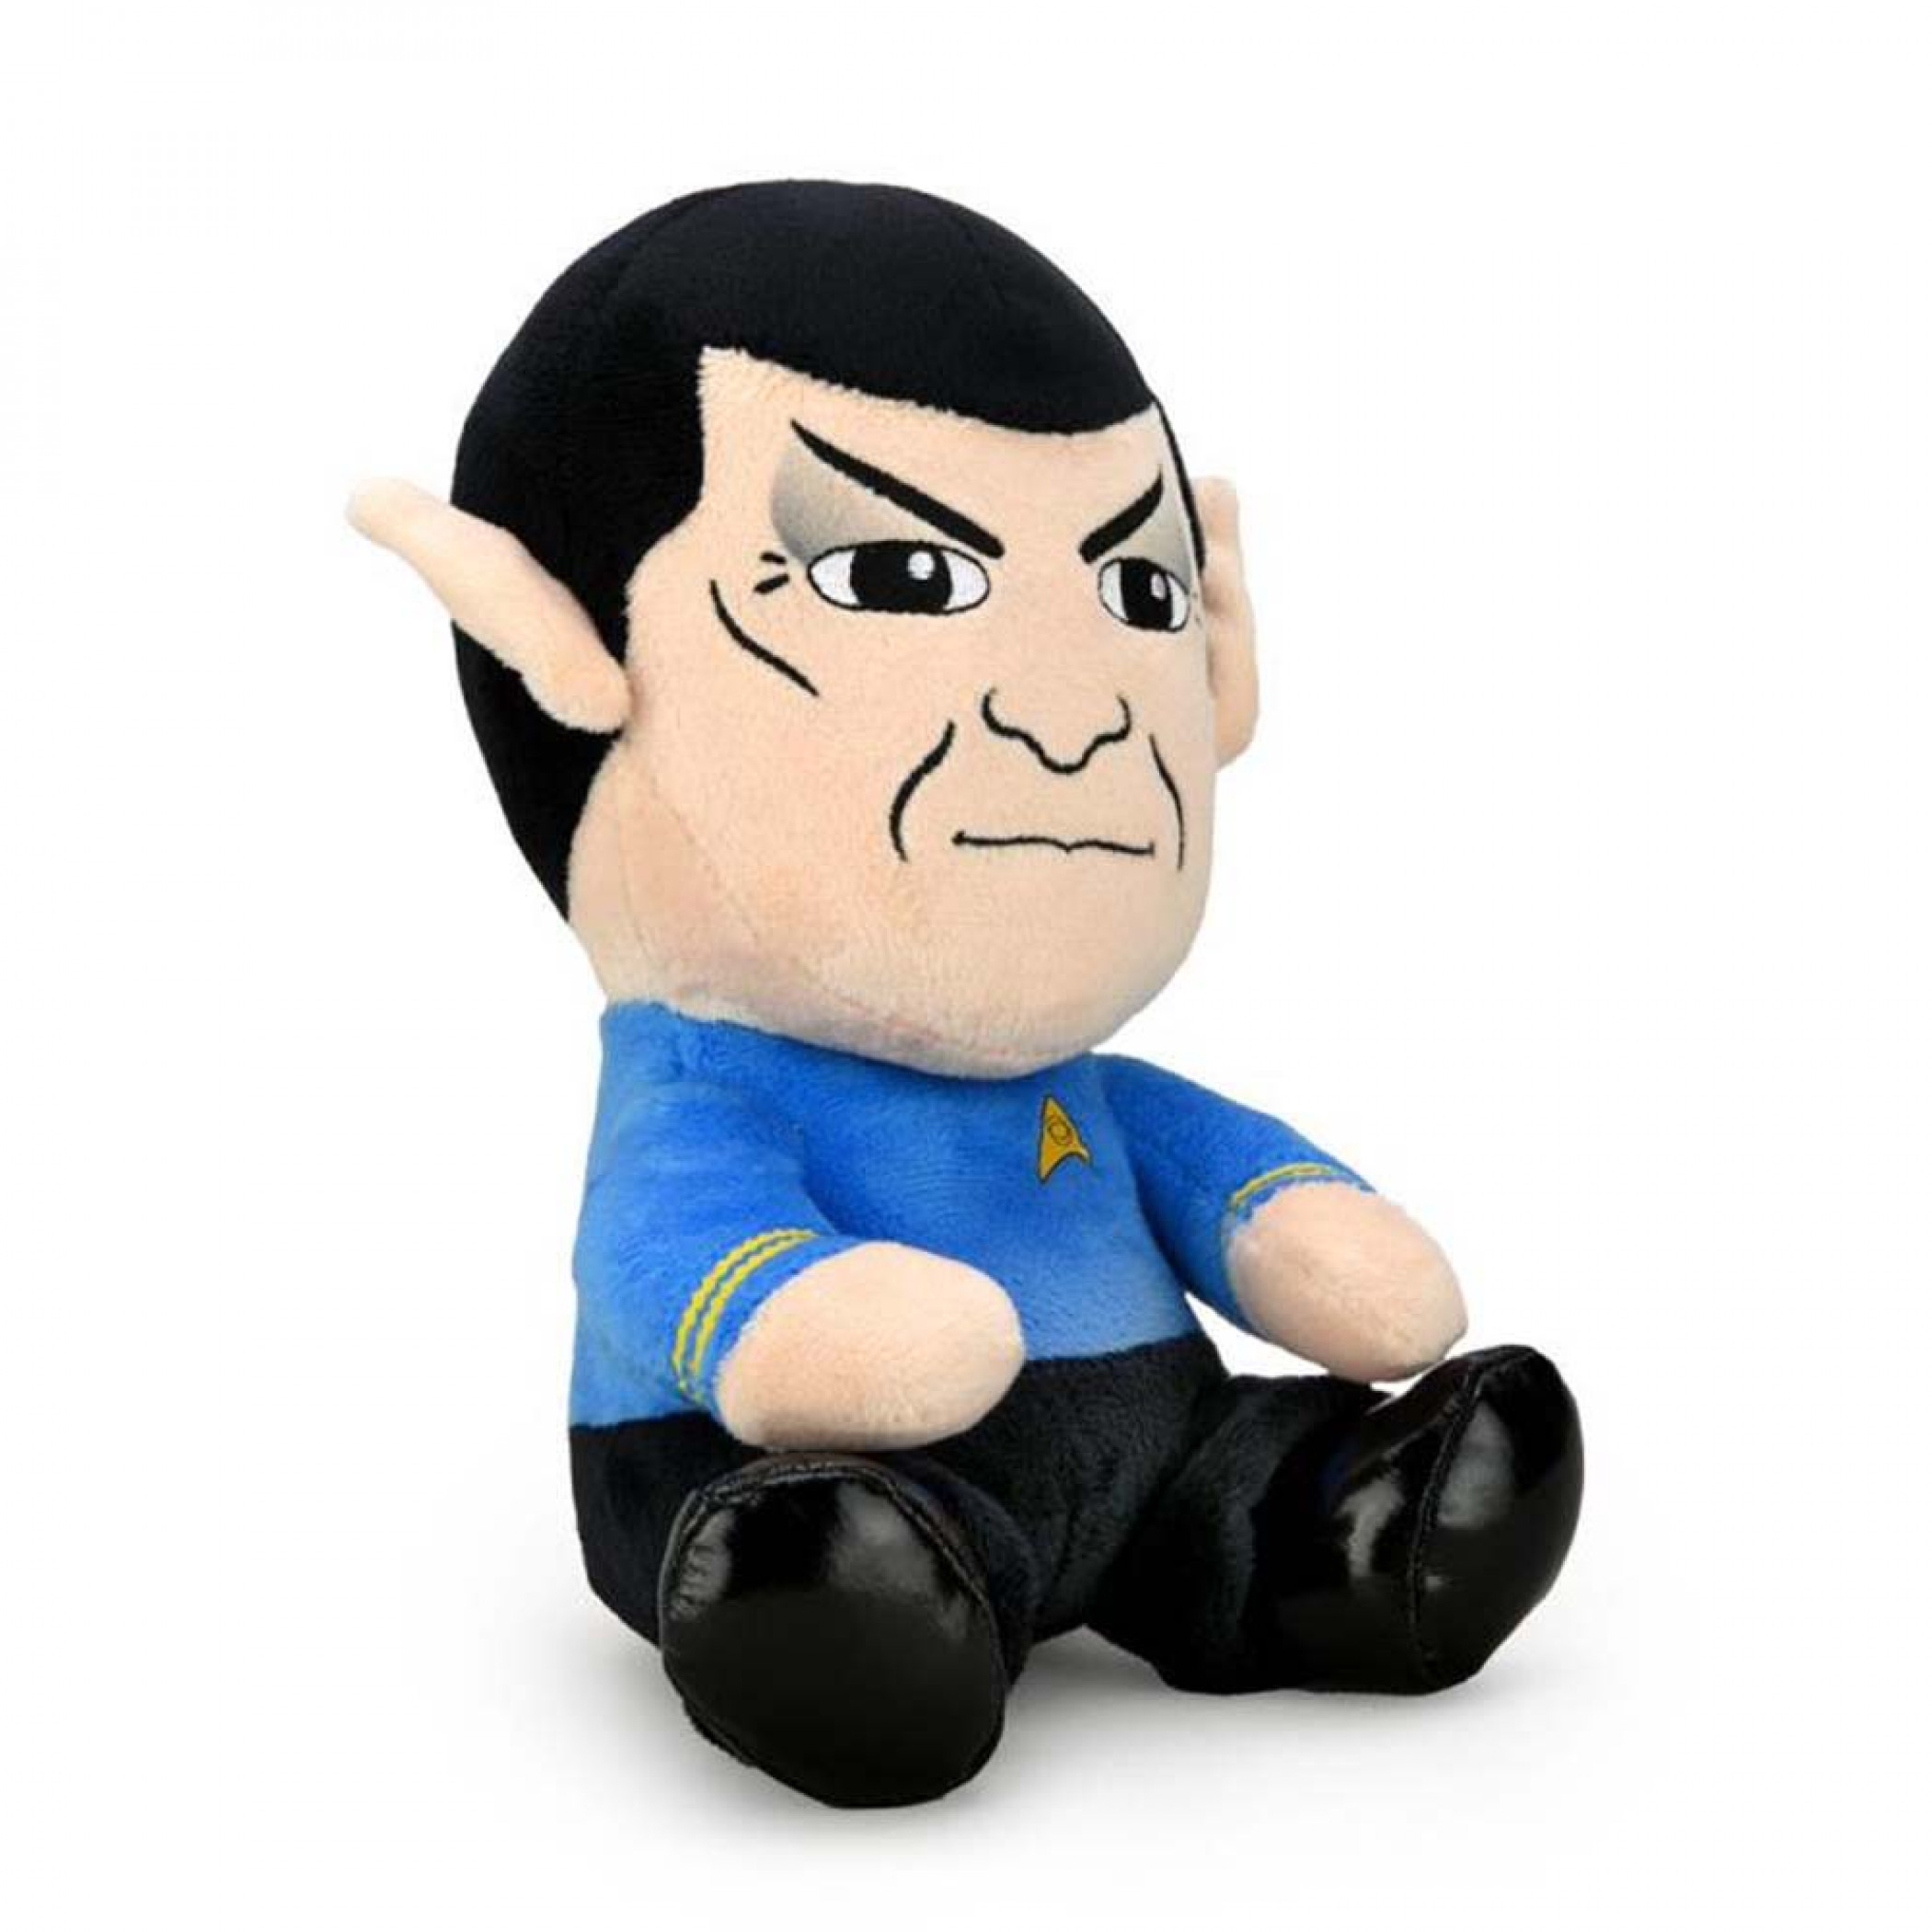 Star Trek: The Original Series Spock 8" Phunny Plush